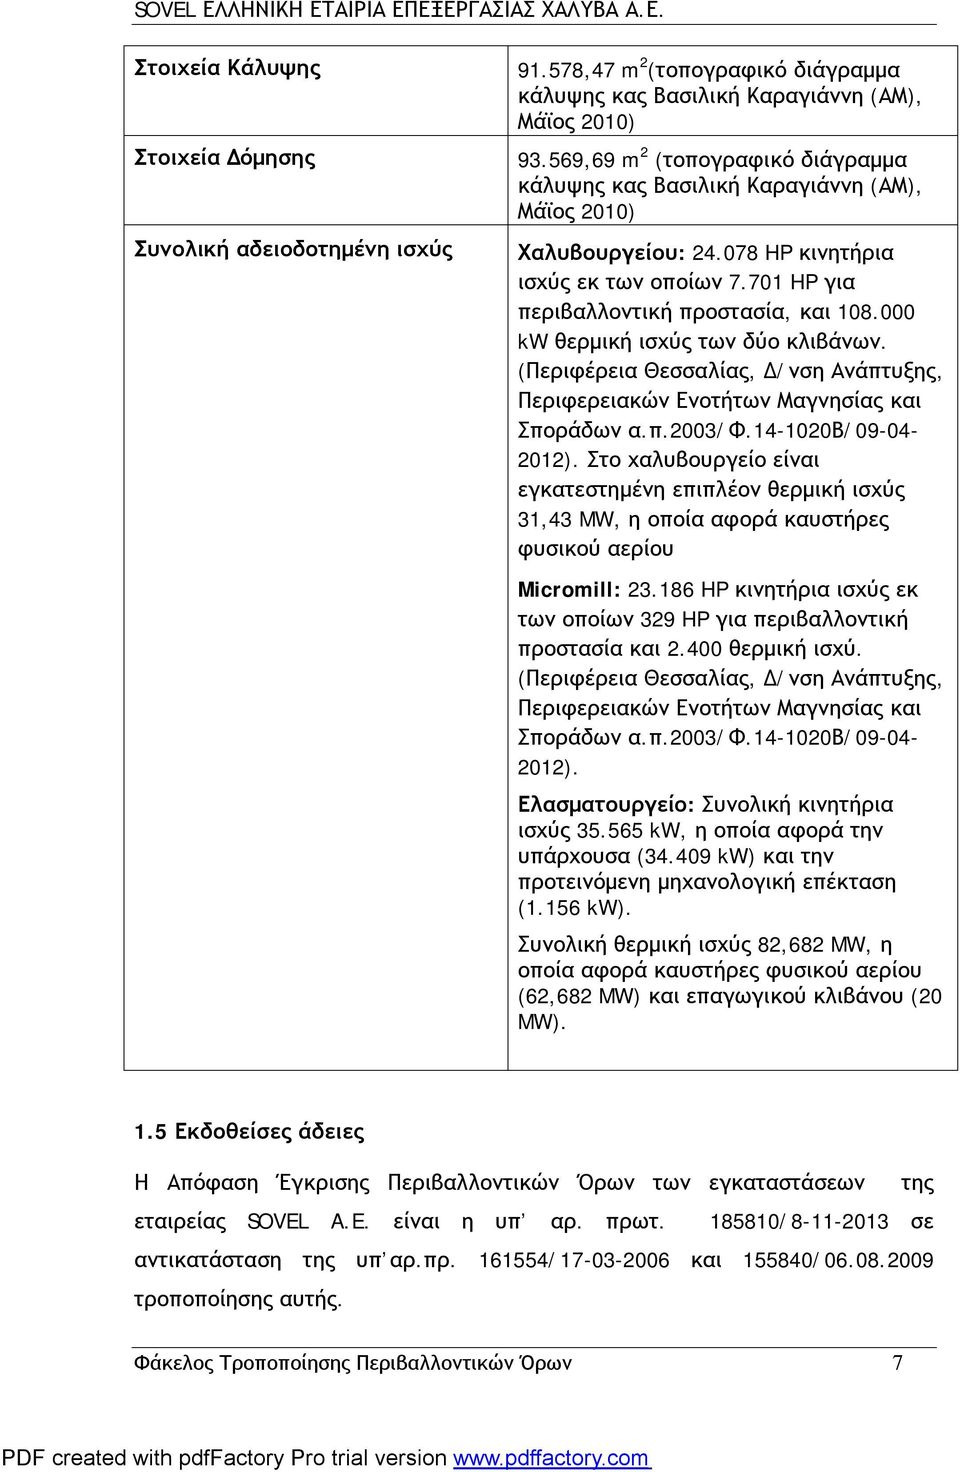 000 kw θερμική ισχύς των δύο κλιβάνων. (Περιφέρεια Θεσσαλίας, Δ/νση Ανάπτυξης, Περιφερειακών Ενοτήτων Μαγνησίας και Σποράδων α.π.2003/φ.14-1020β/09-04- 2012).